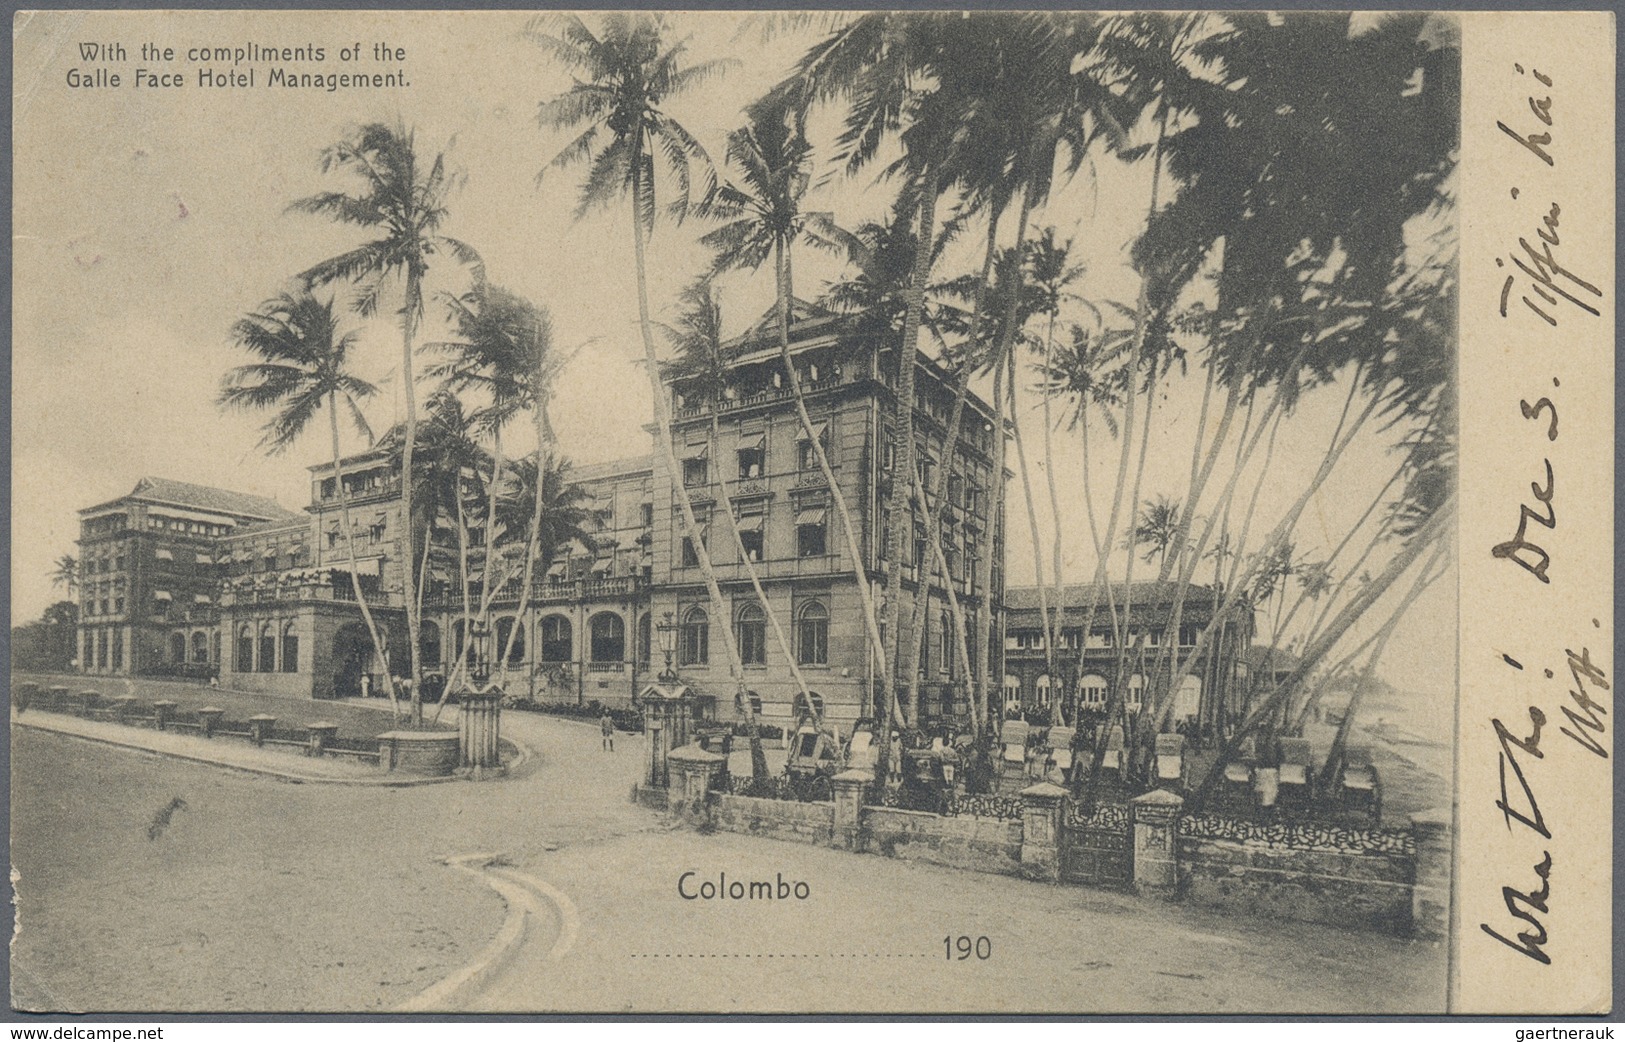 Br Ceylon / Sri Lanka: 1900-1910's ca.: Collection of 65 picture postcards, almost all different, colou